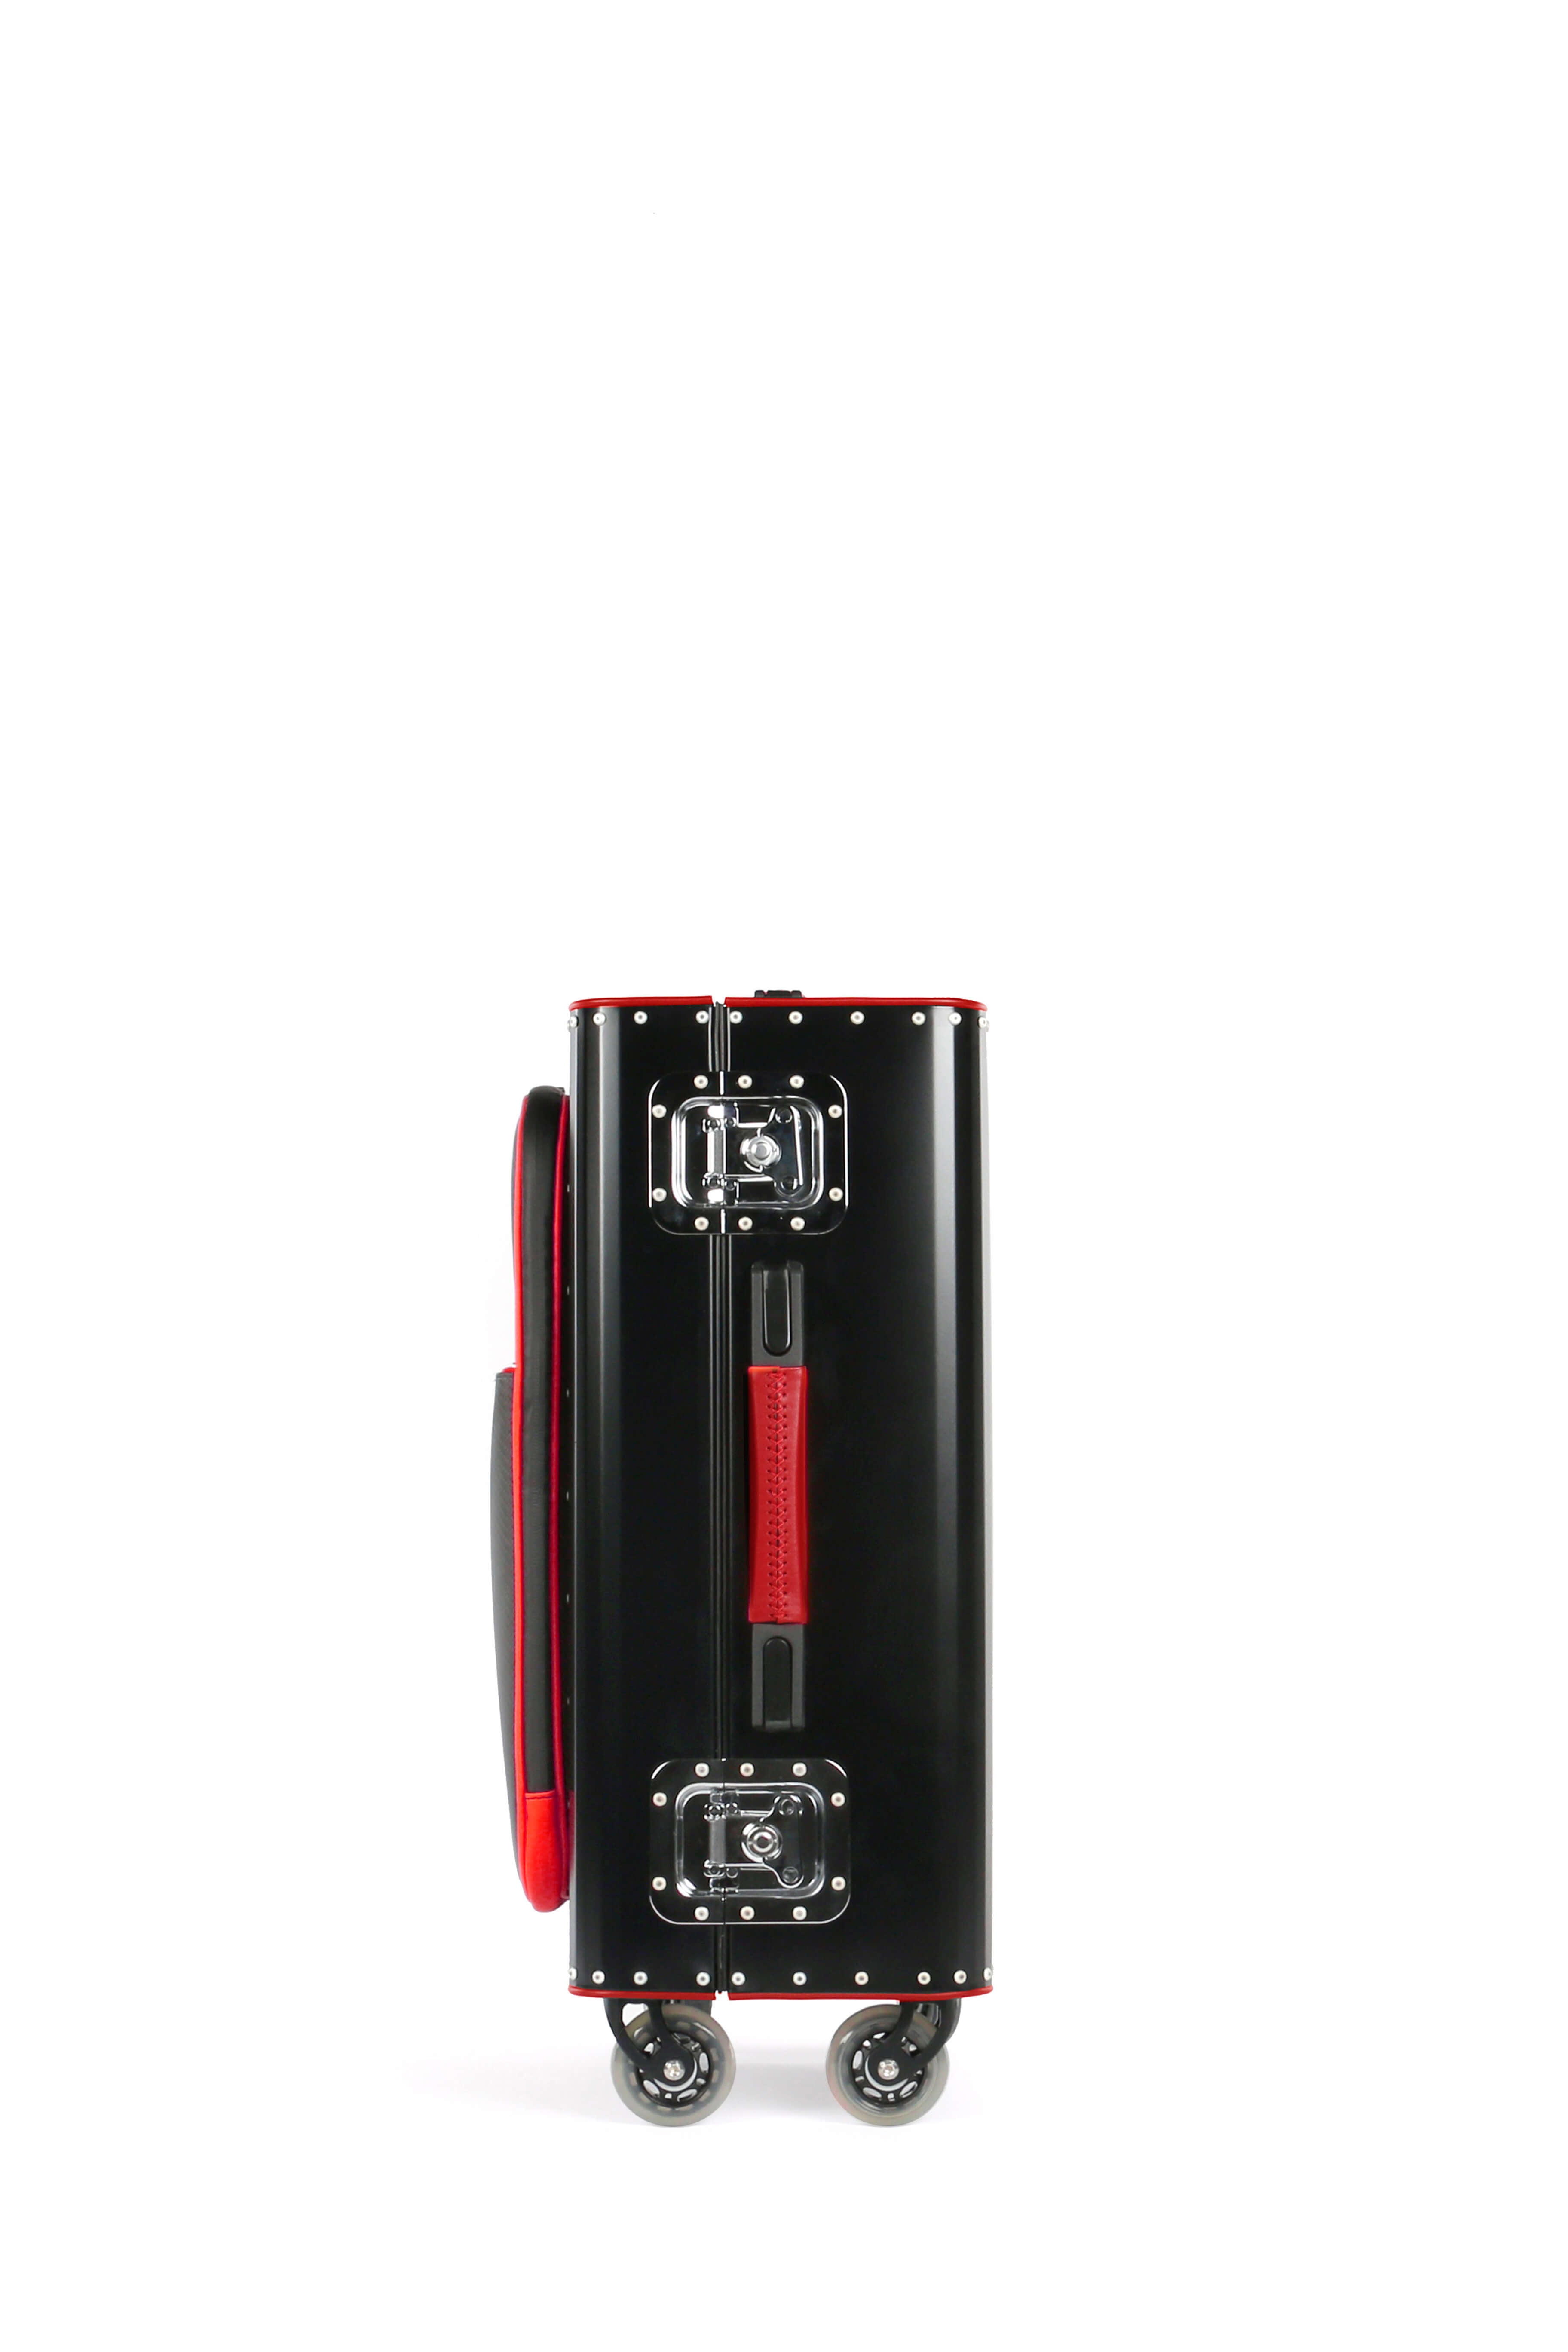 Kronos Black Pocket Titanium Cabin Trolley, Red